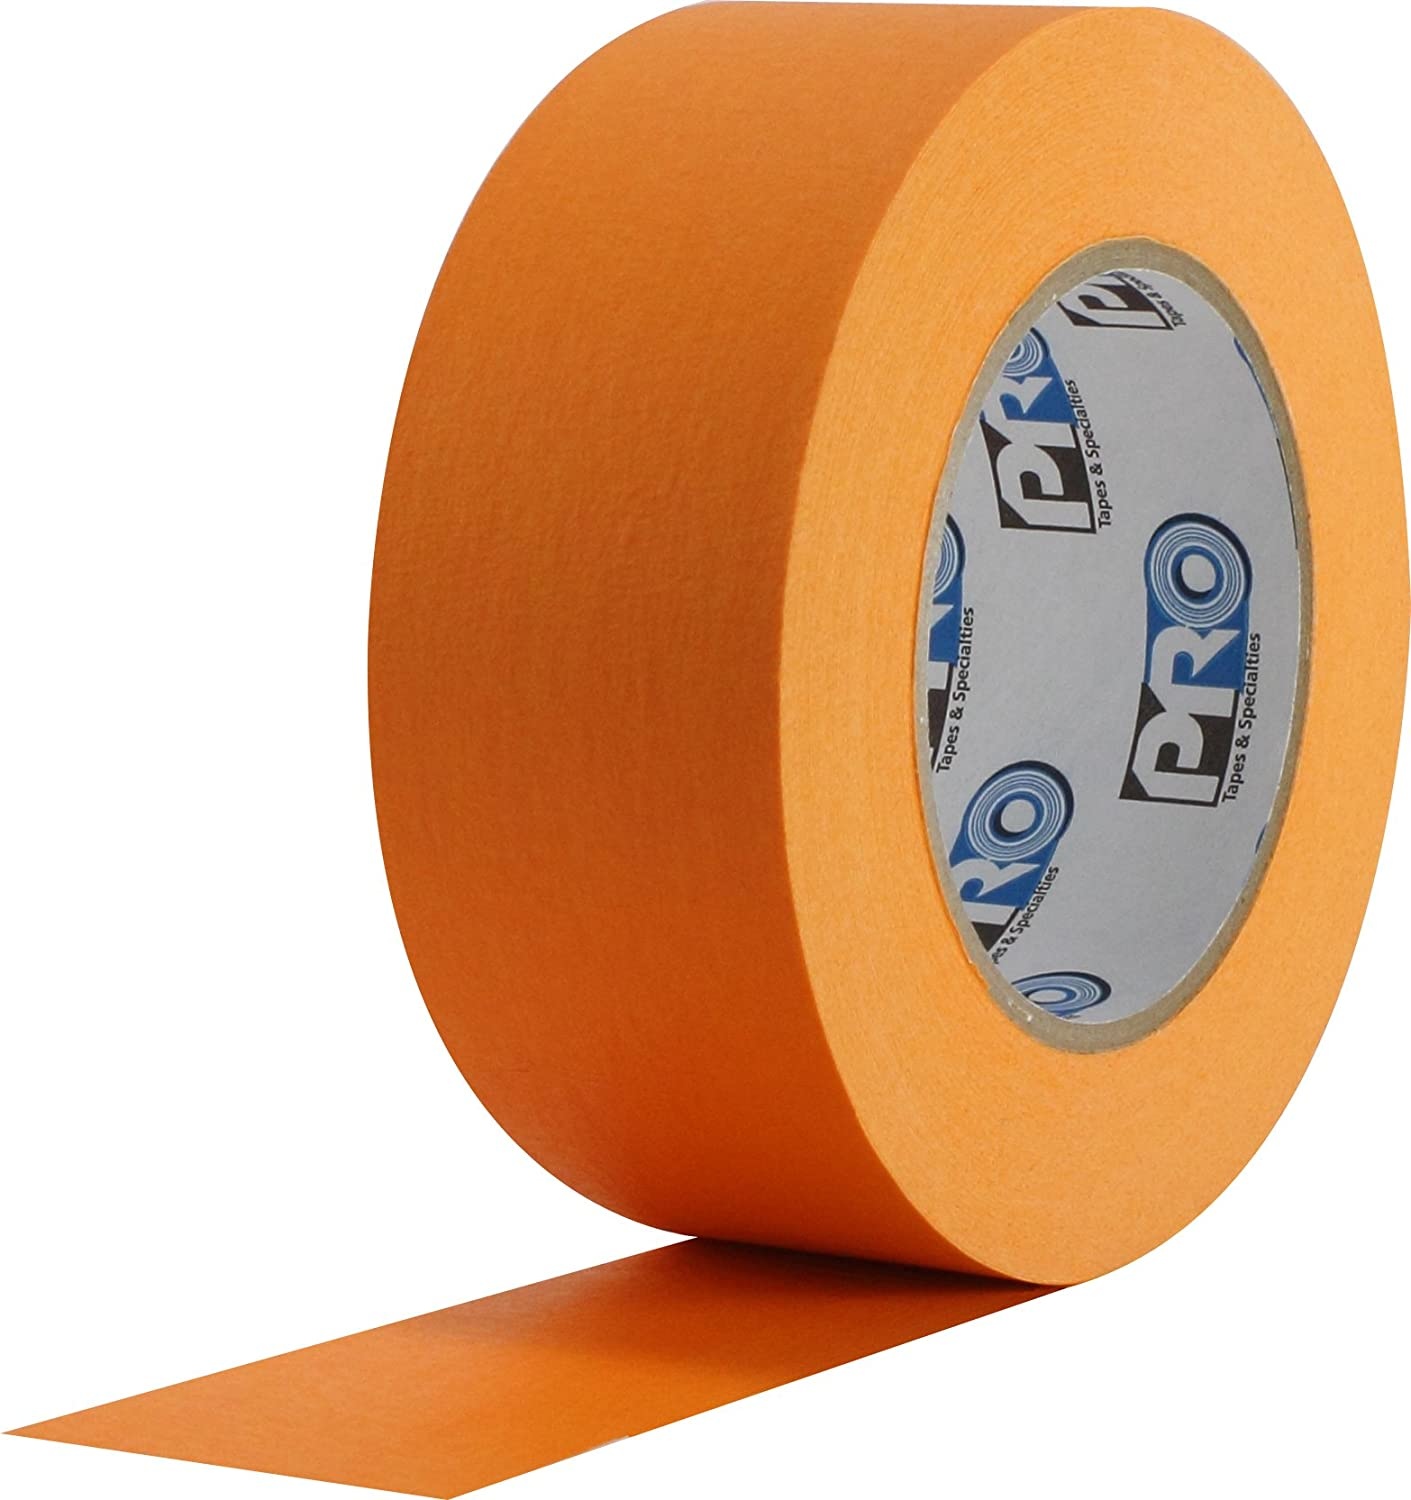 Artist Tape kaufen - ProTapes Premium Papierklebeband | allbuyone